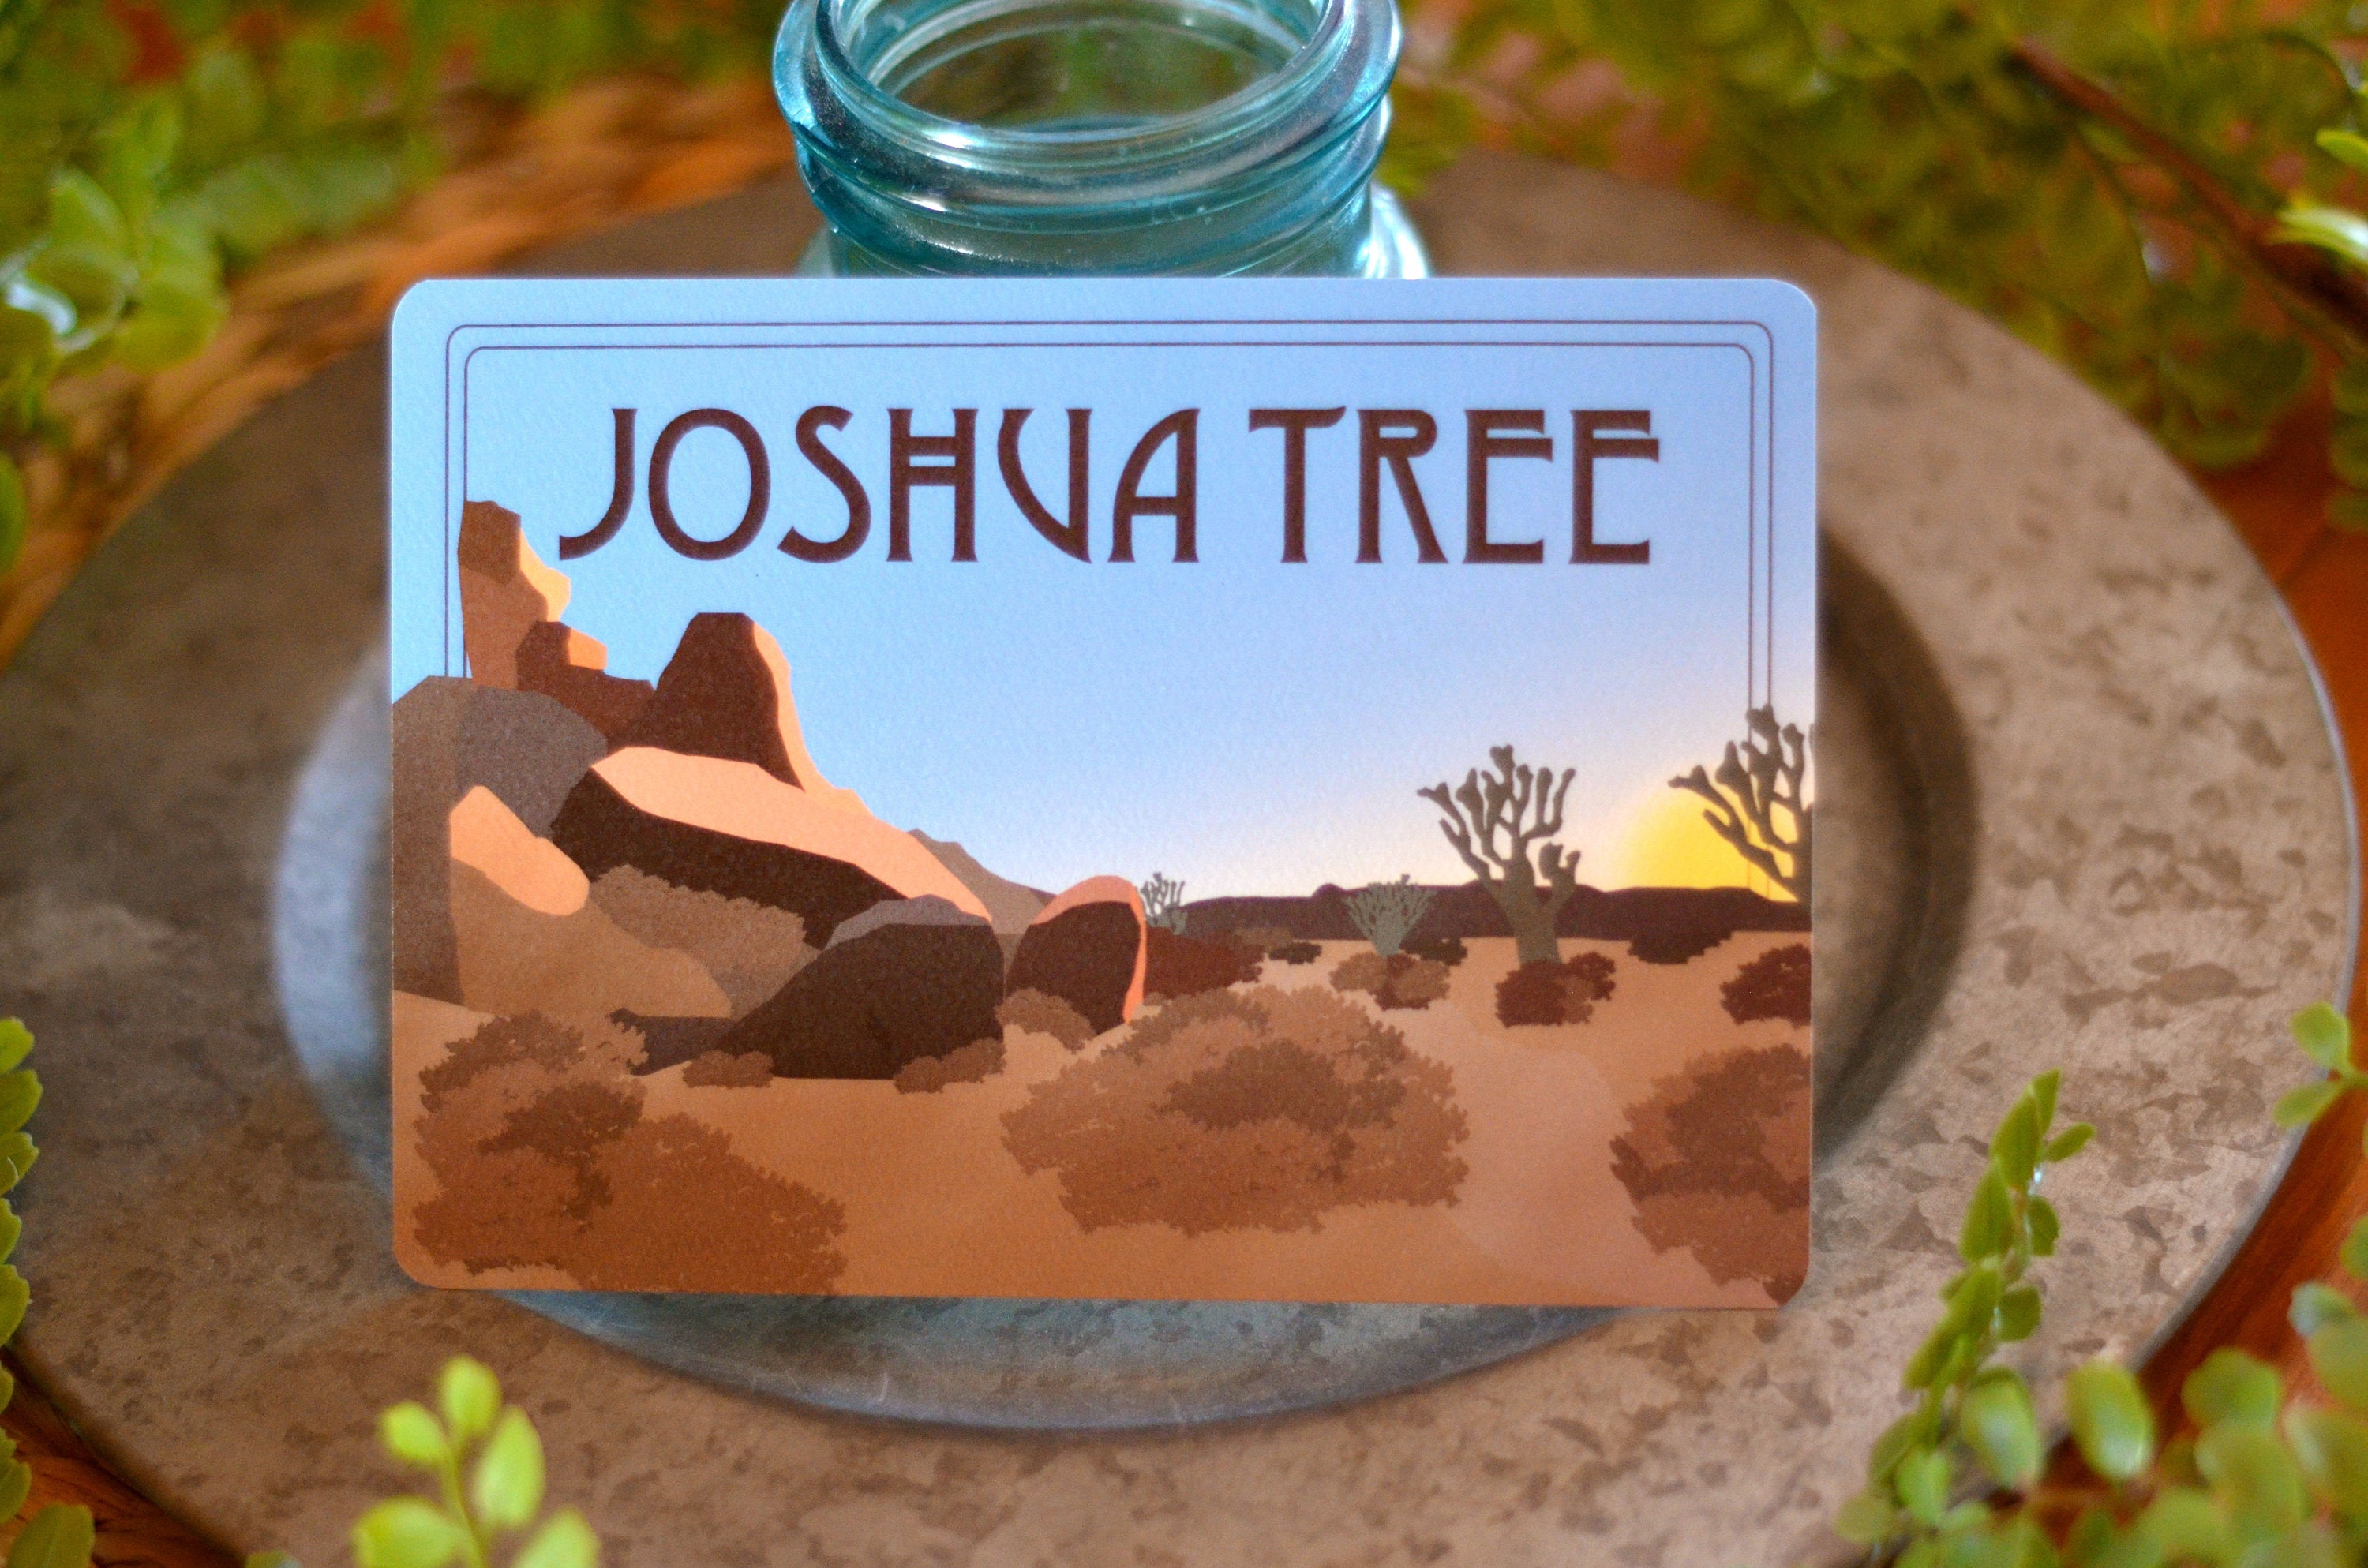 Joshua Tree National Park Wedding Signs // Desert Cactus Landscape // 5x7 FLAT Craftsman Table Number